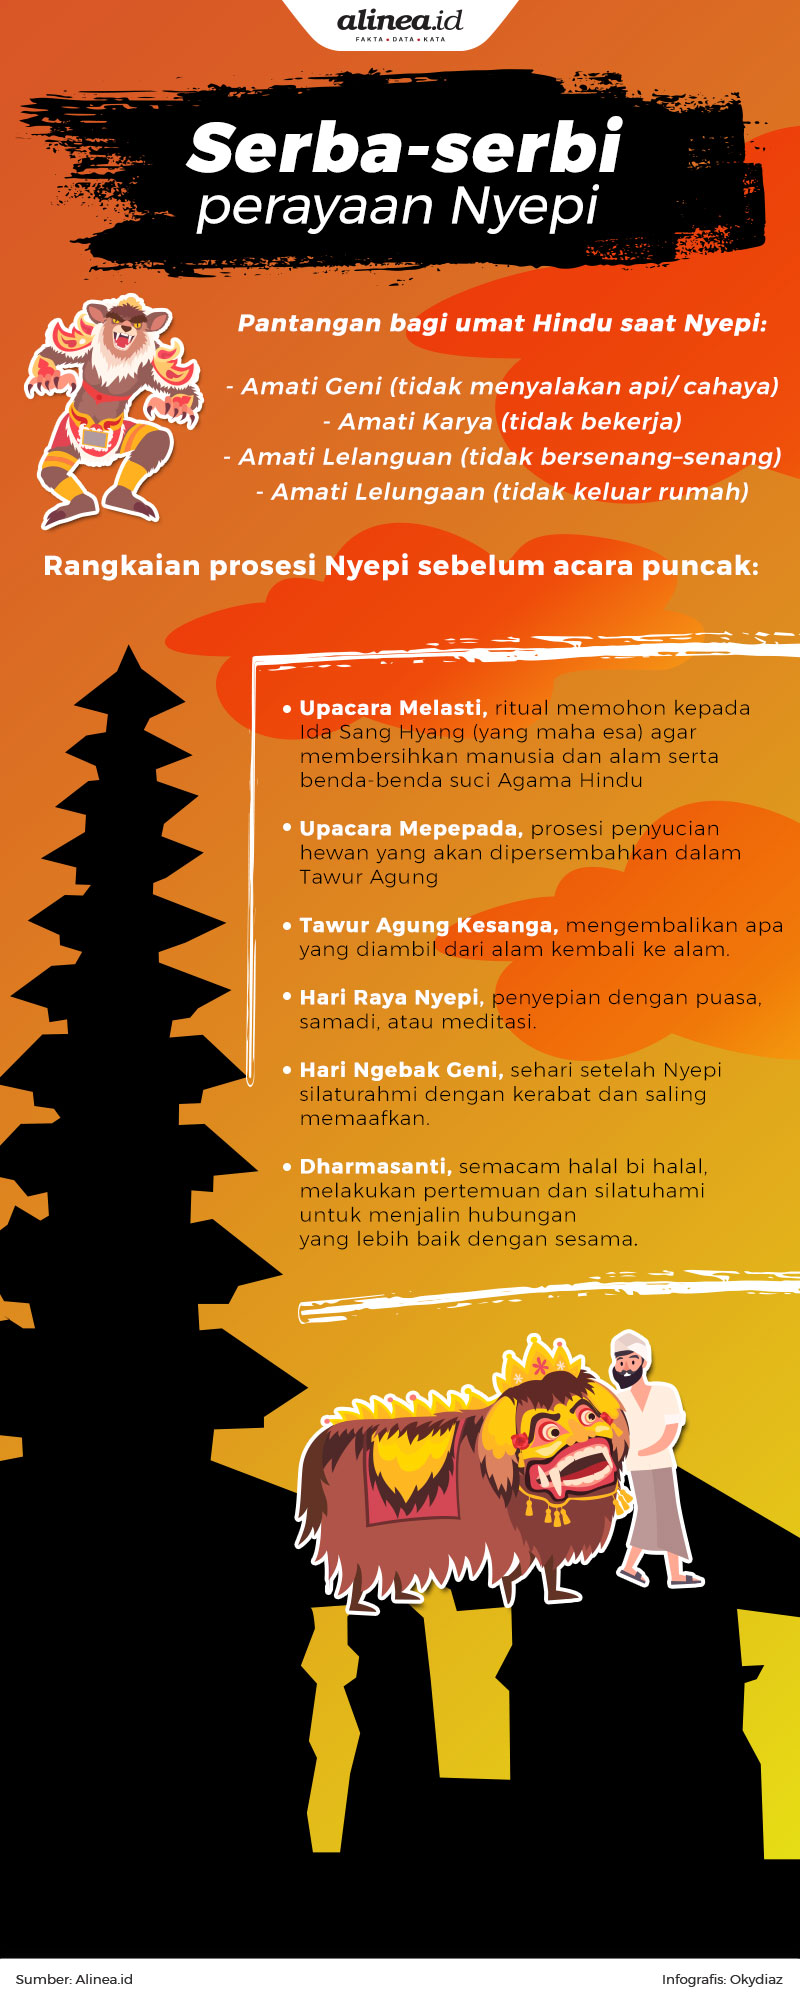 Merayakan Hari Raya Nyepi di Jakarta bagi warga umat Hindu Bali sangat berbeda dengan perayaan yang berlangsung di Bali. (Infografis: Oky)